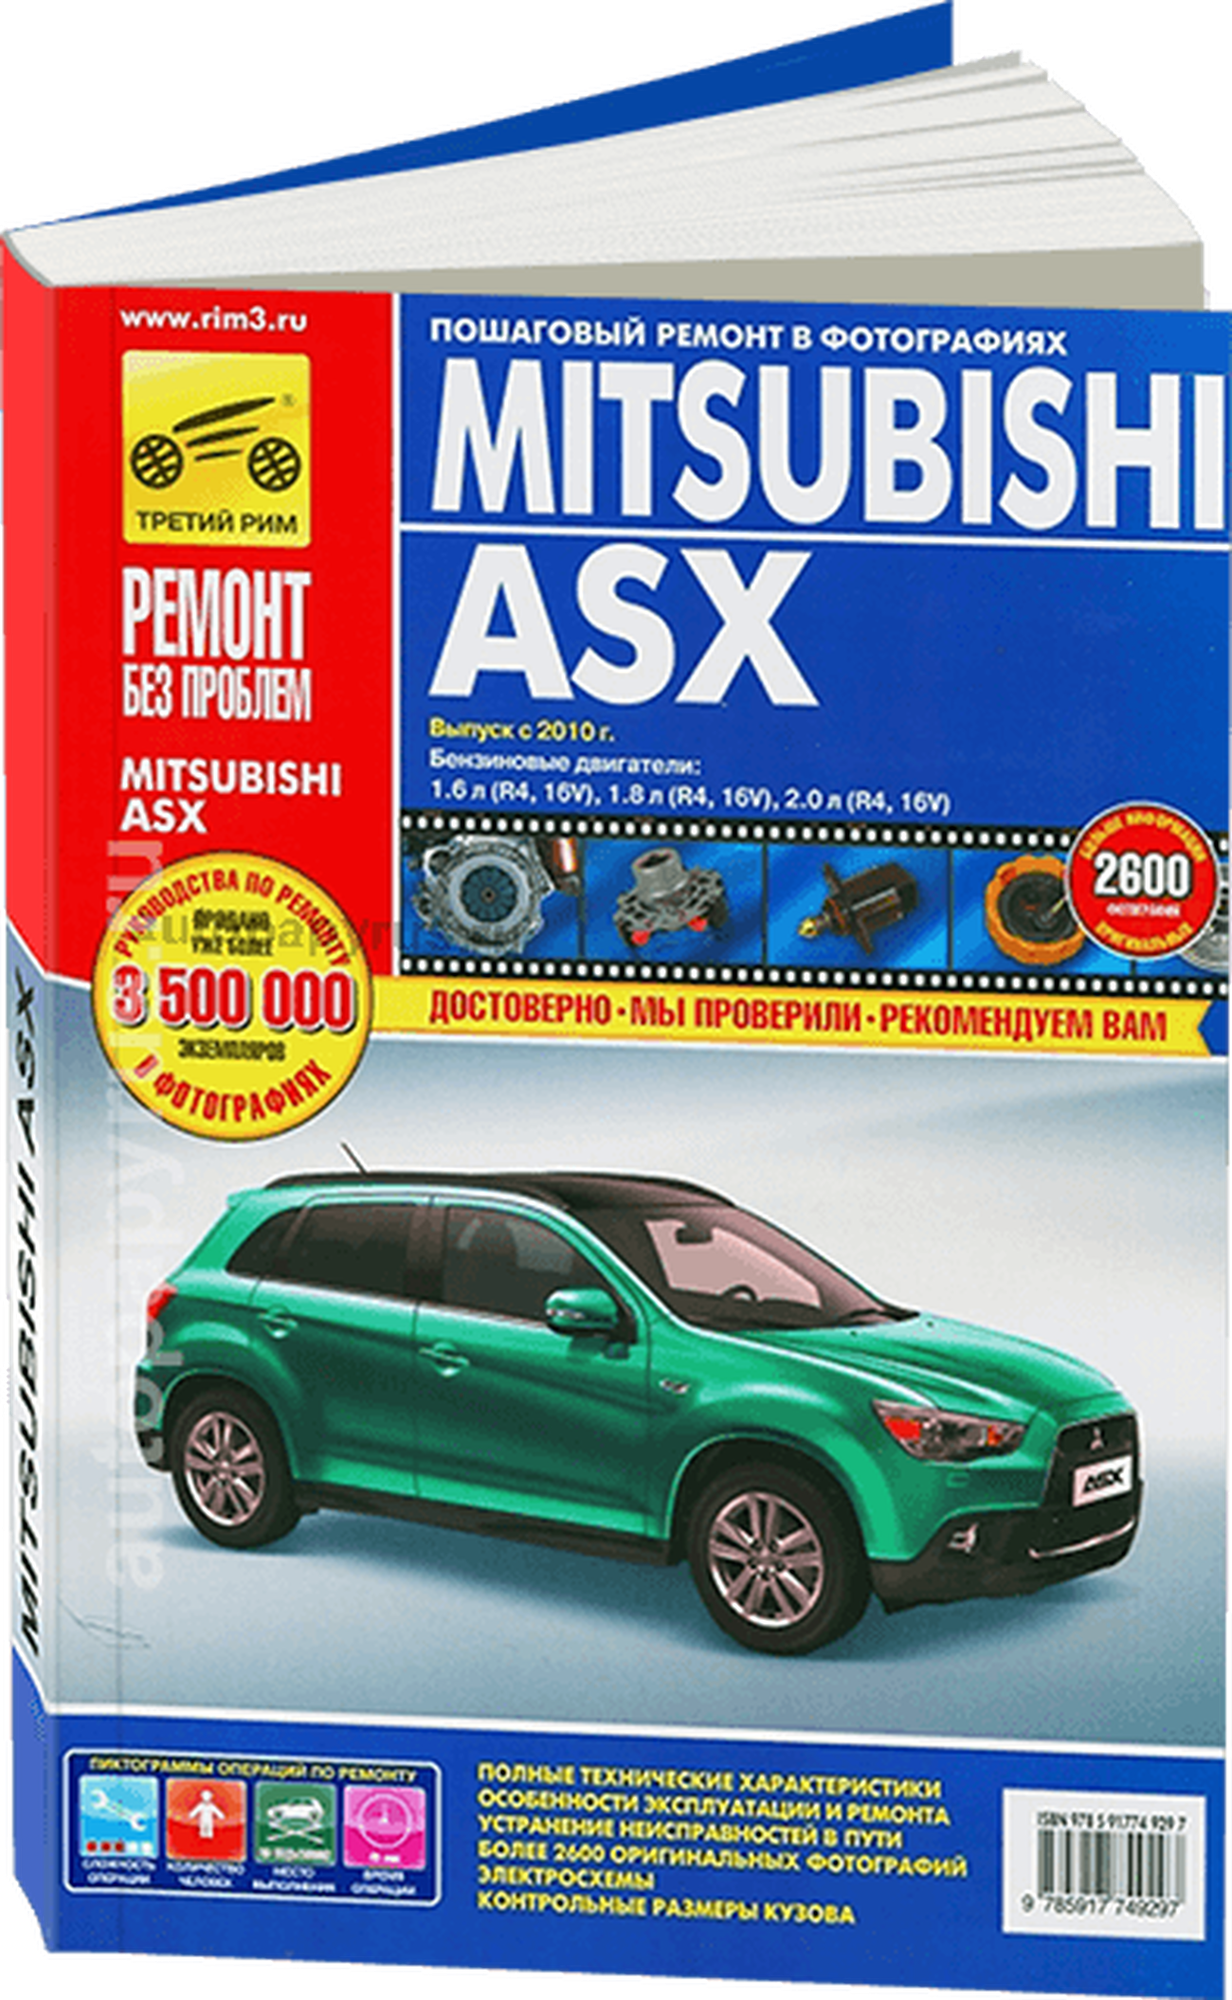 Mitsubishi ASX. Руководство по эксплуатации, техническому обслуживанию и ремонту - фото №1